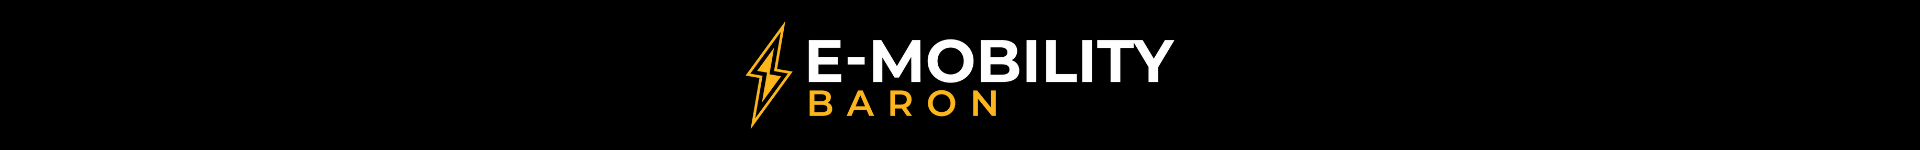 De E-Mobility Barons achtergrond